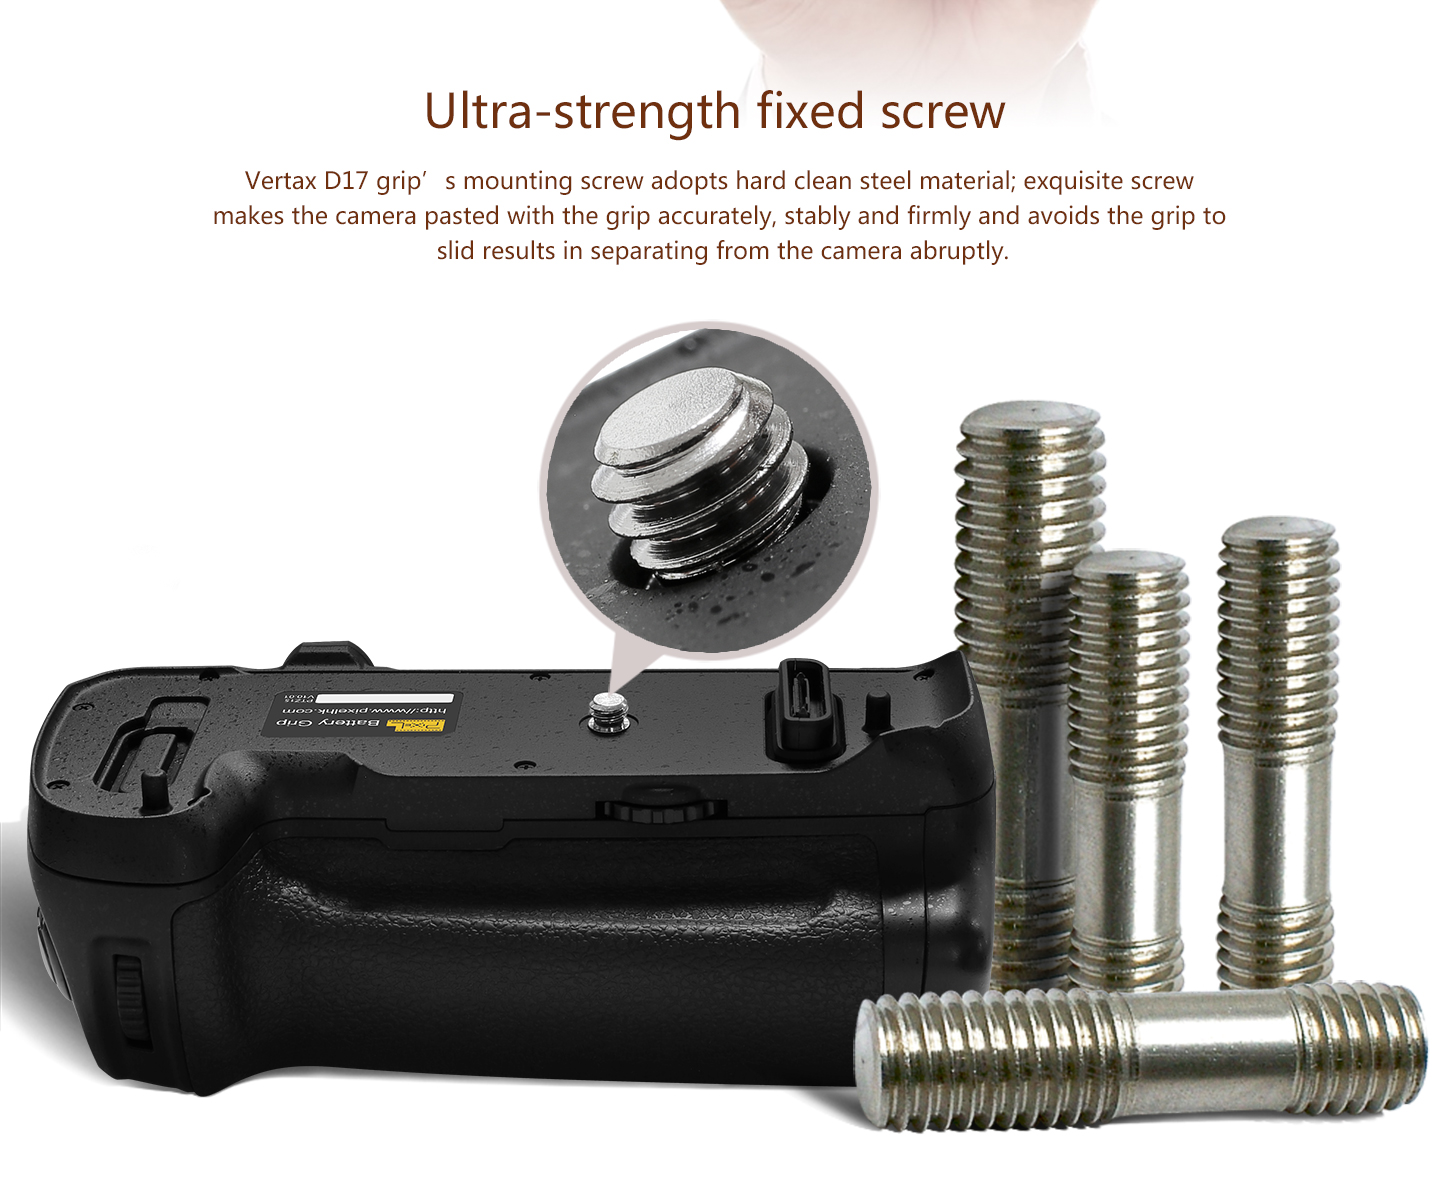 Ultra-strength fixed screw